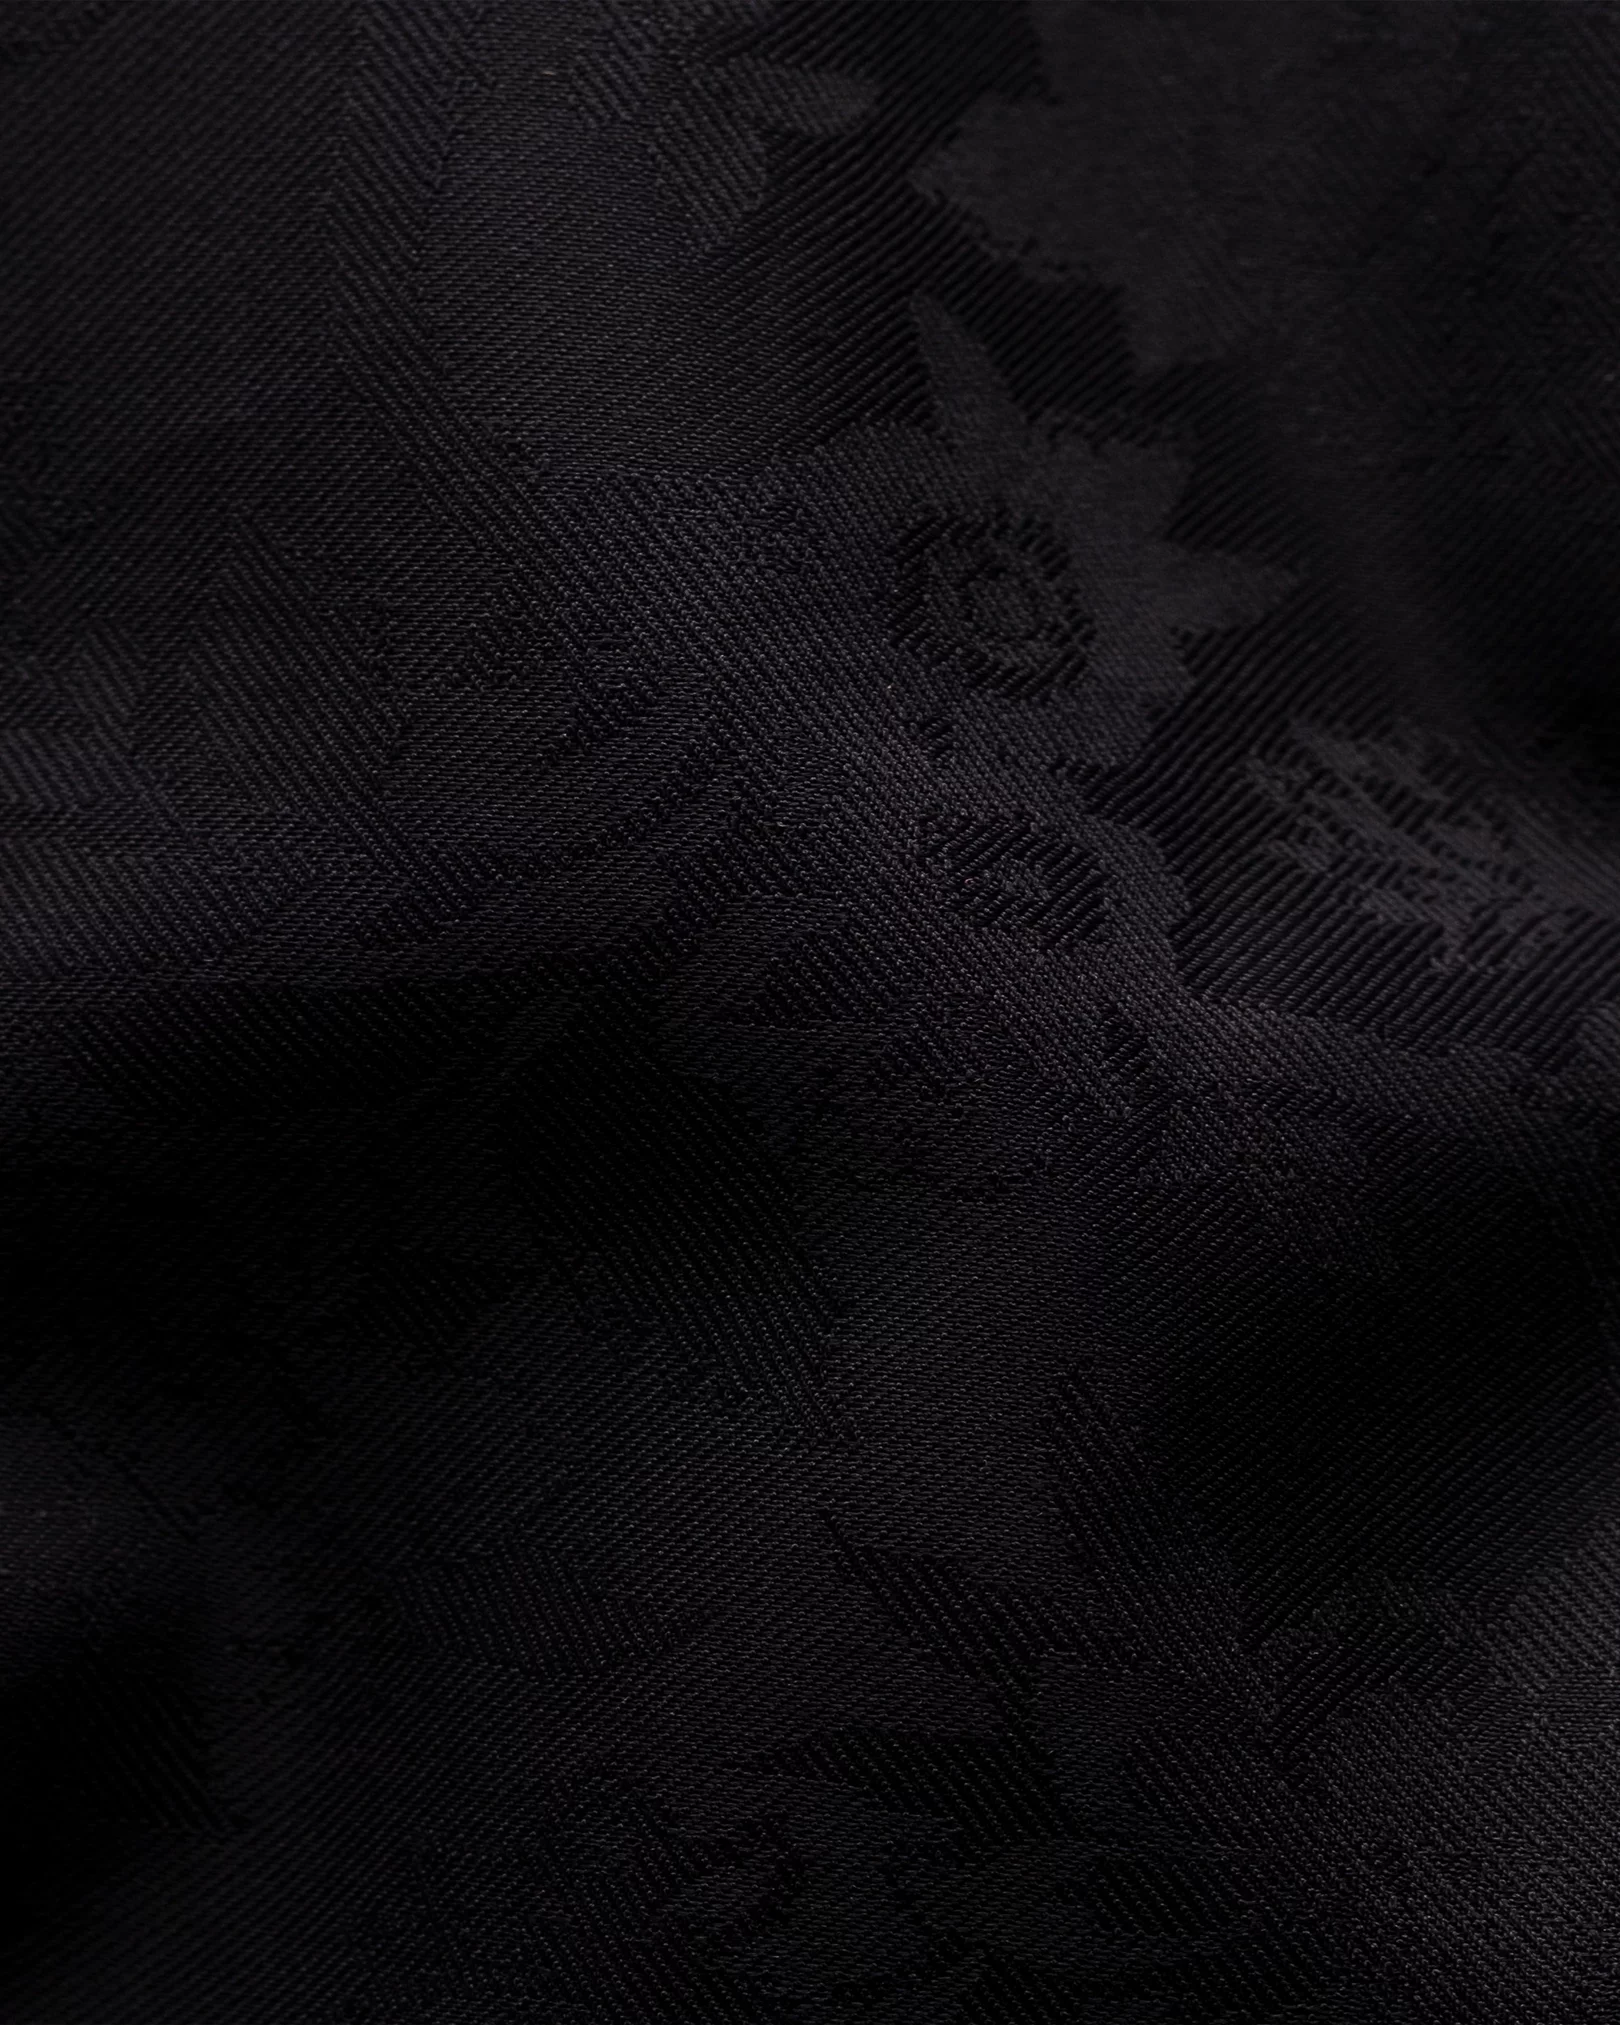 Eton - black floral jacquard shirt cut away single